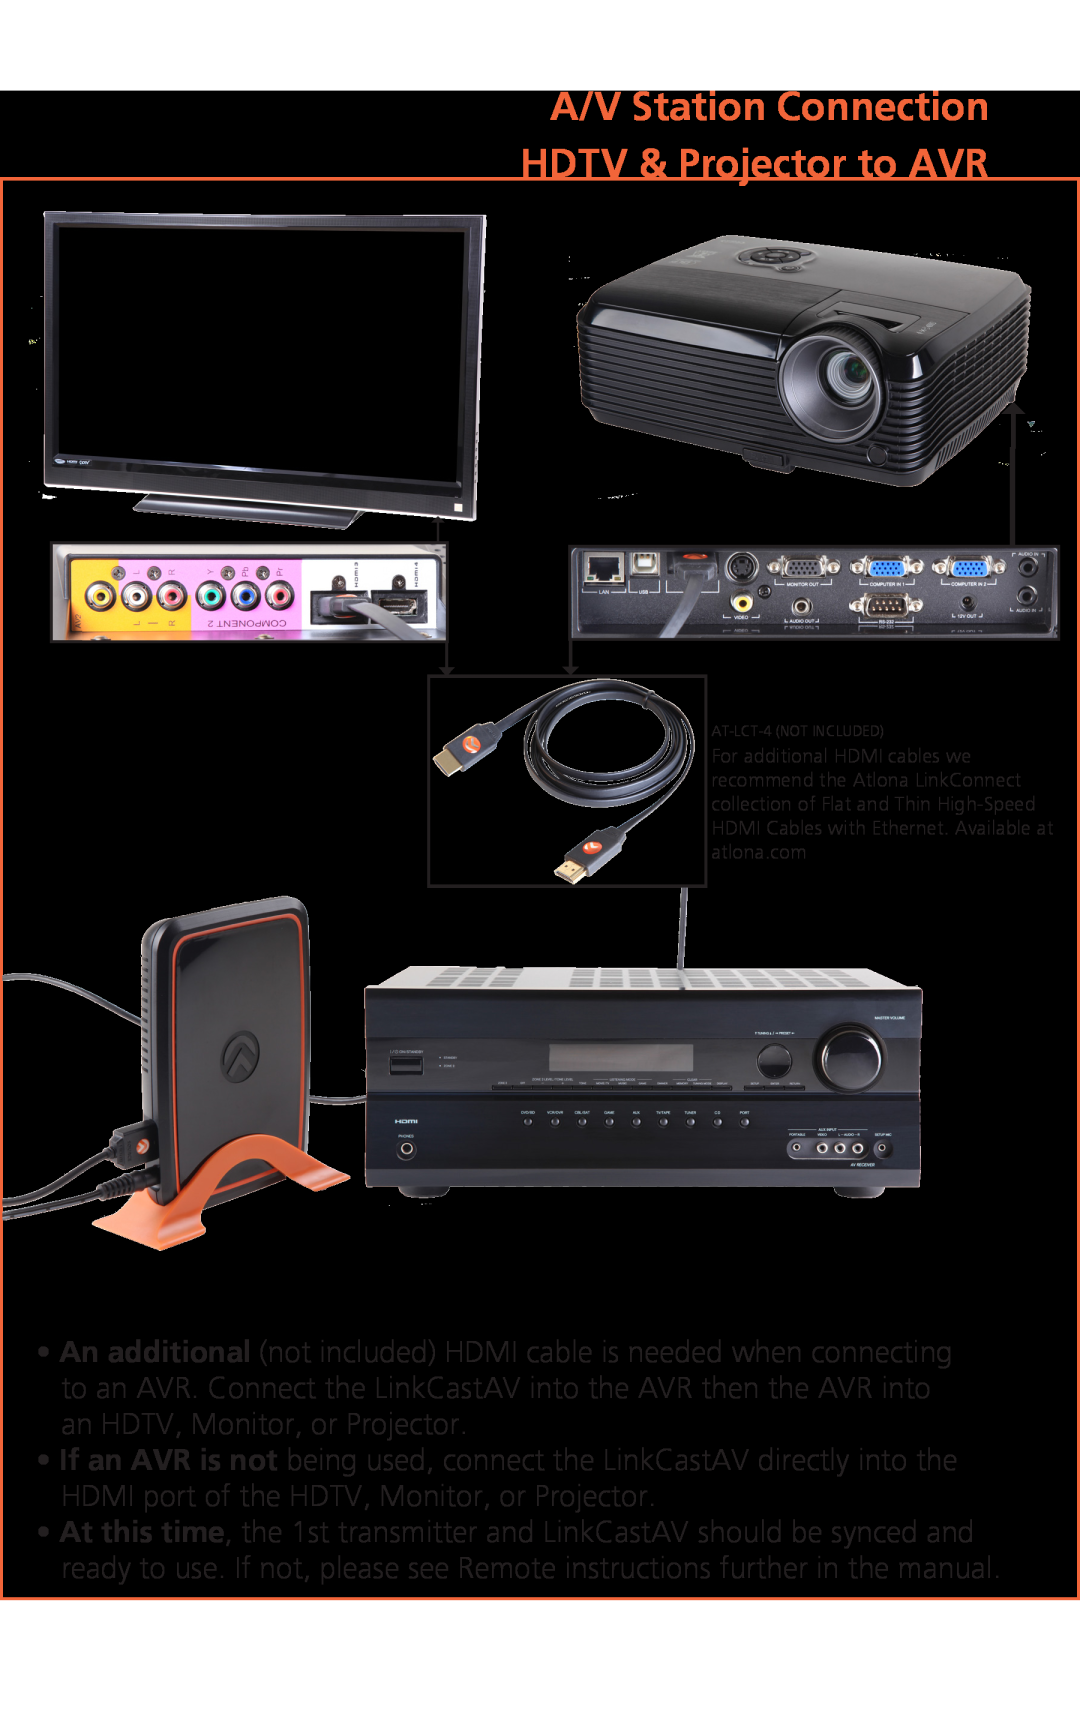 Atlona Rev. 2.0 manual A/V Station Connection HDTV & Projector to AVR 